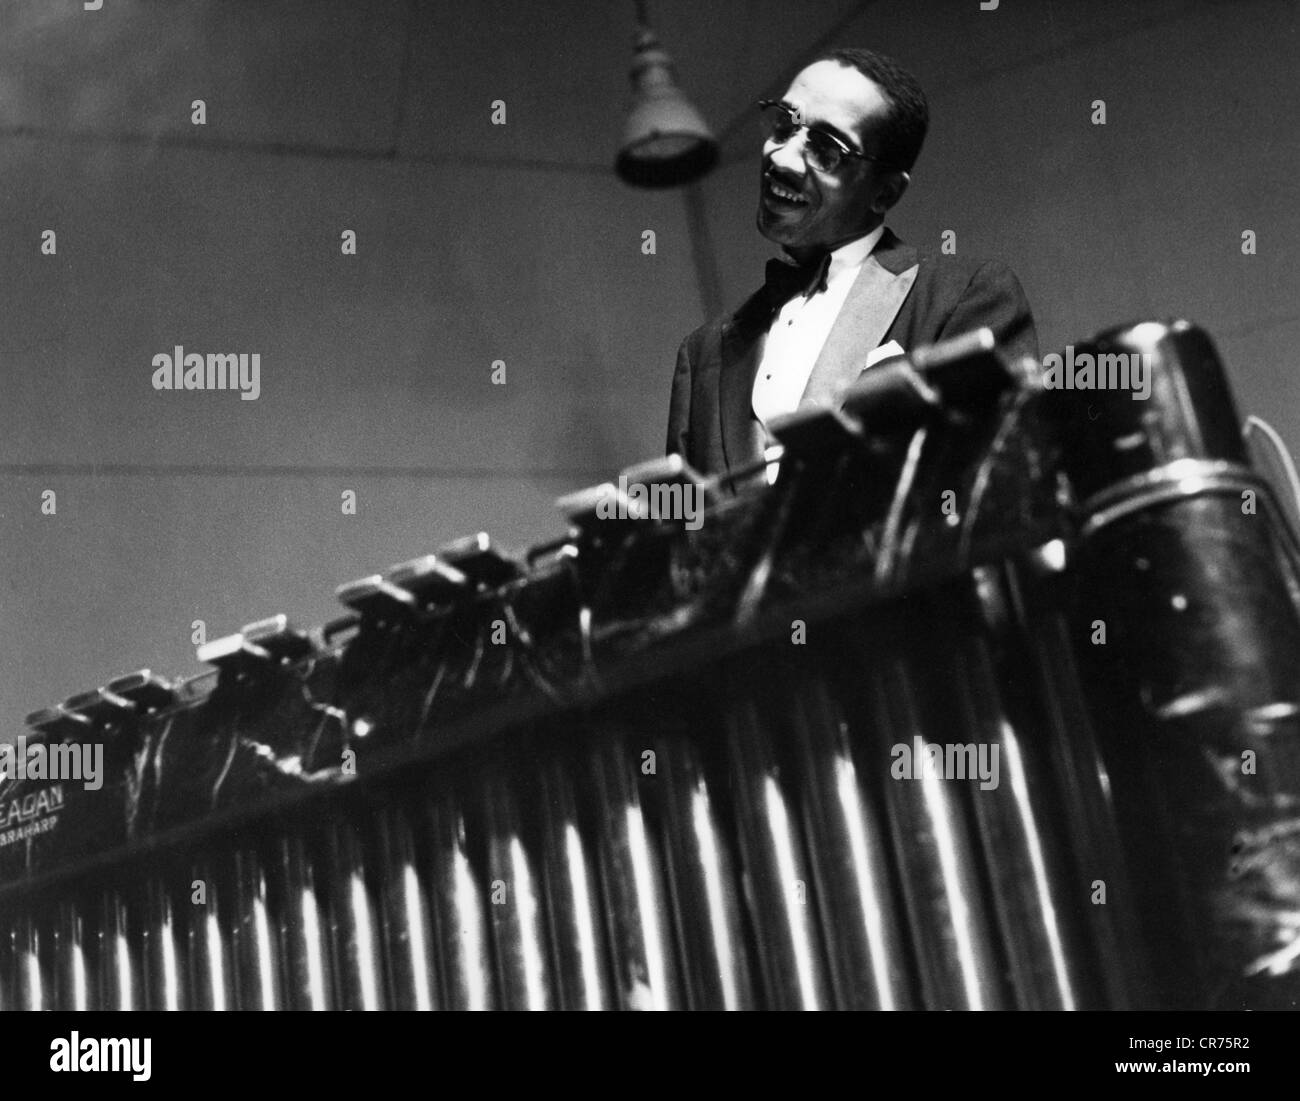 Modern Jazz Quartett, the, American jazz band, member: Milt Jackson, playing vibraphone, 1955, Stock Photo